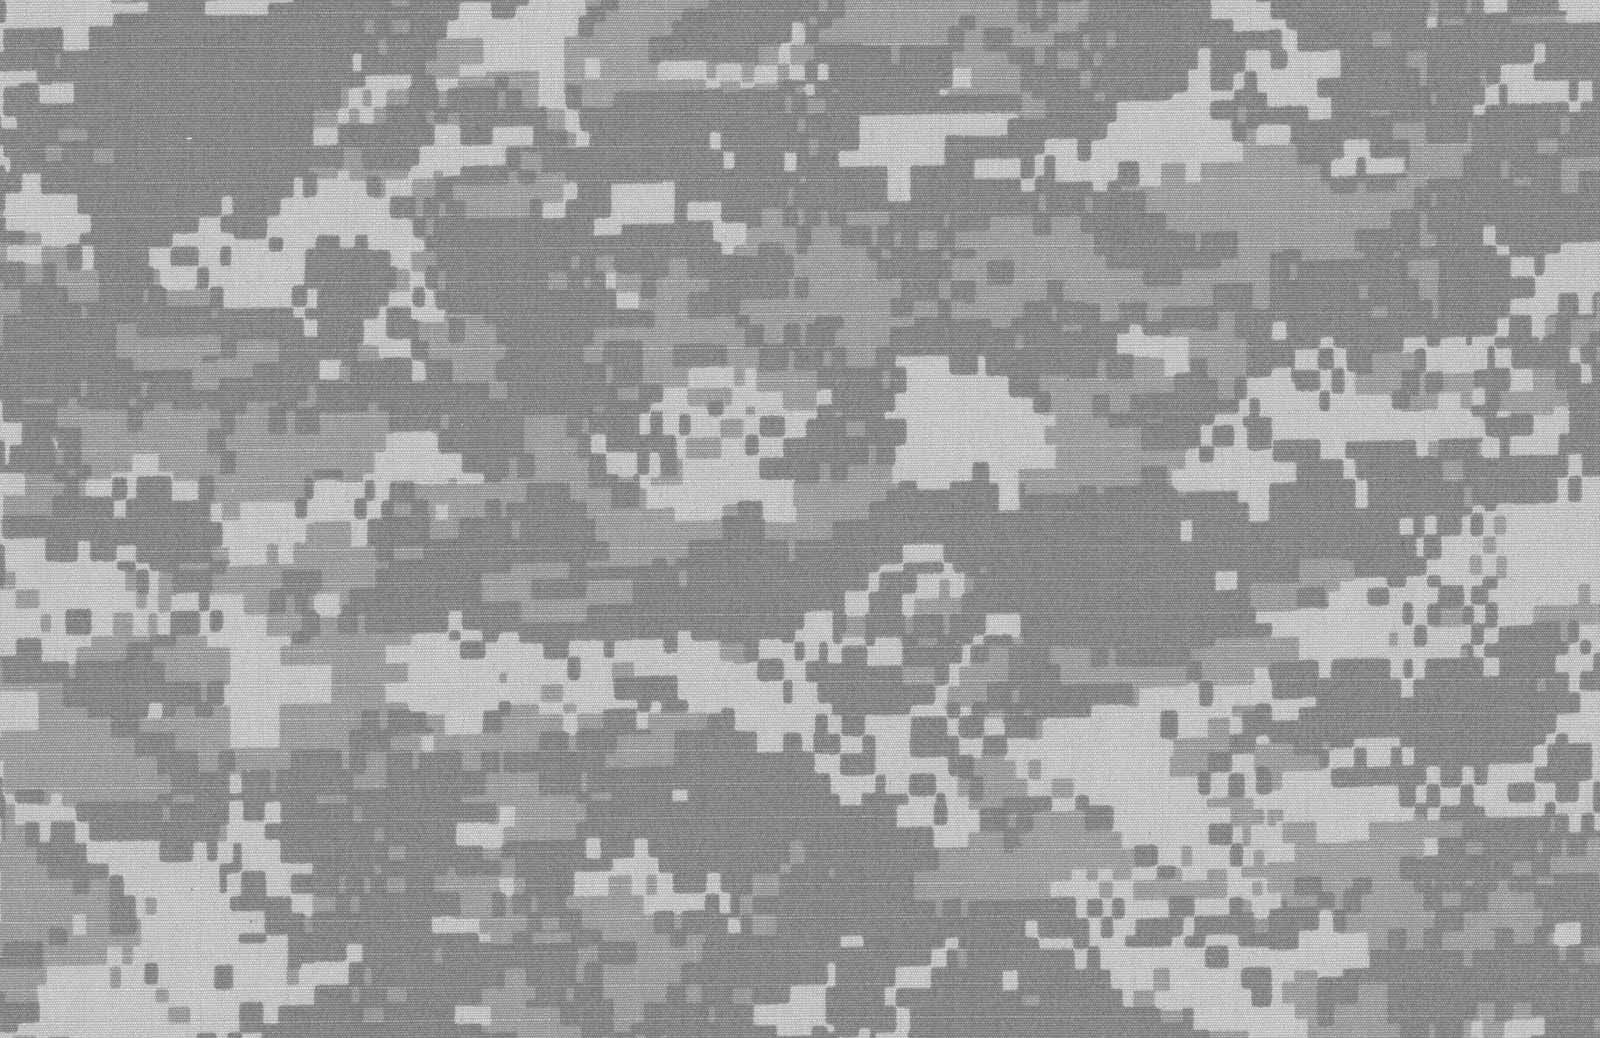 Universal Camouflage pattern (UCP) / Army Combat uniform pattern (ACUPAT) / Digital Camouflage (digicam)